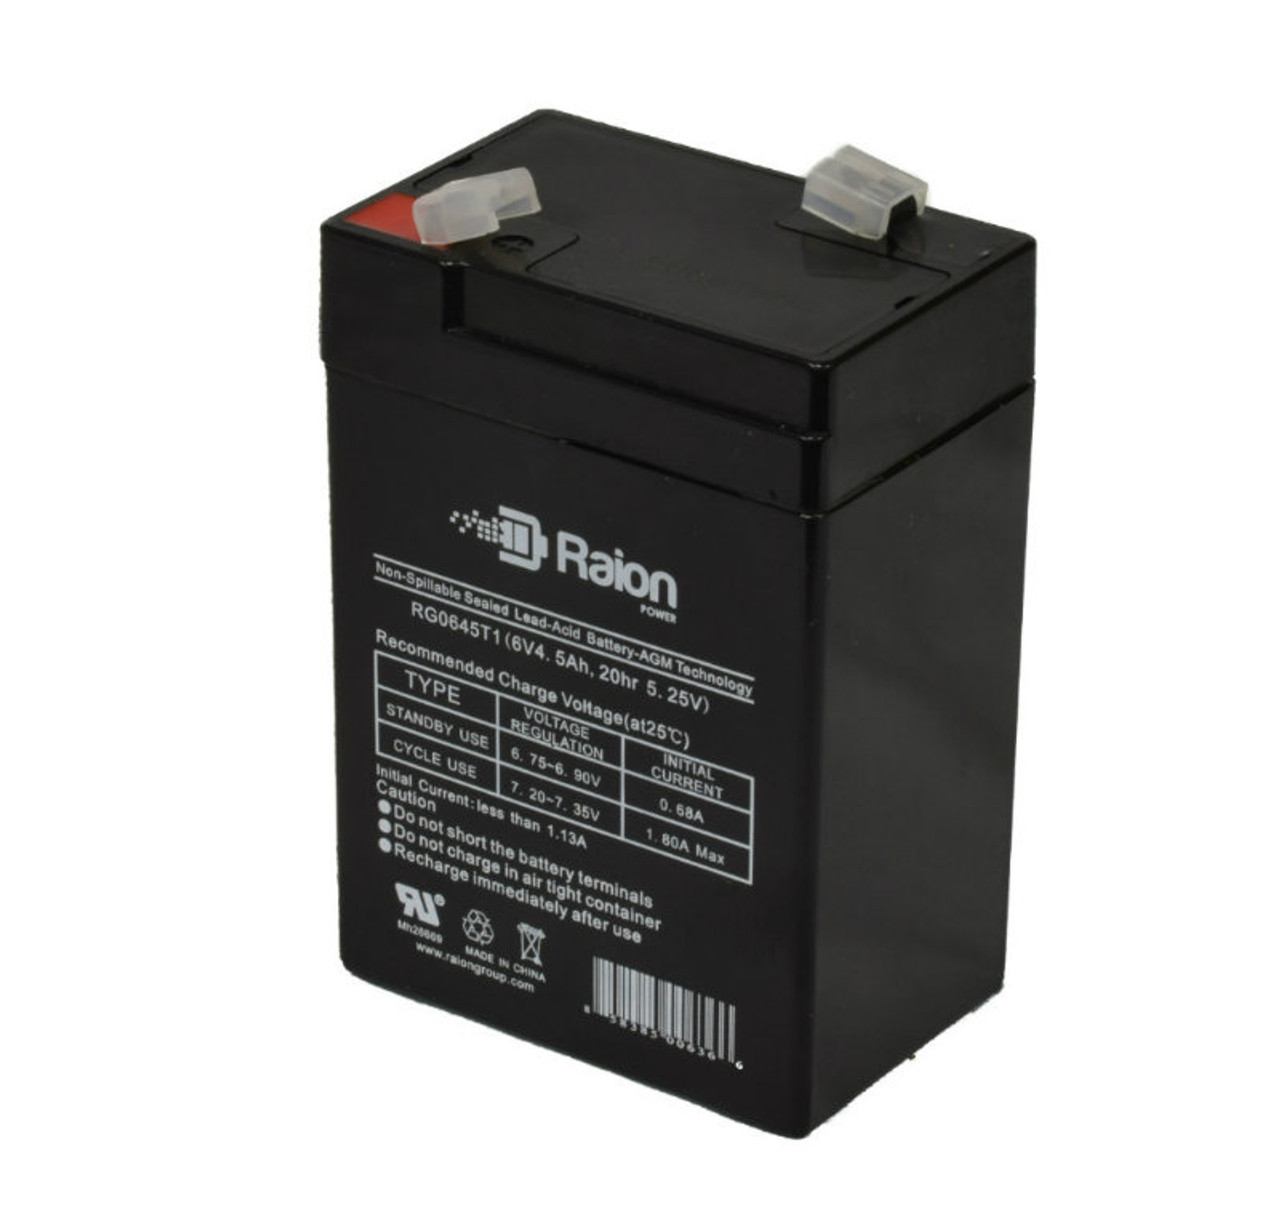 Raion Power RG0645T1 6V 4.5Ah Replacement Battery Cartridge for Kaiying KS4-6